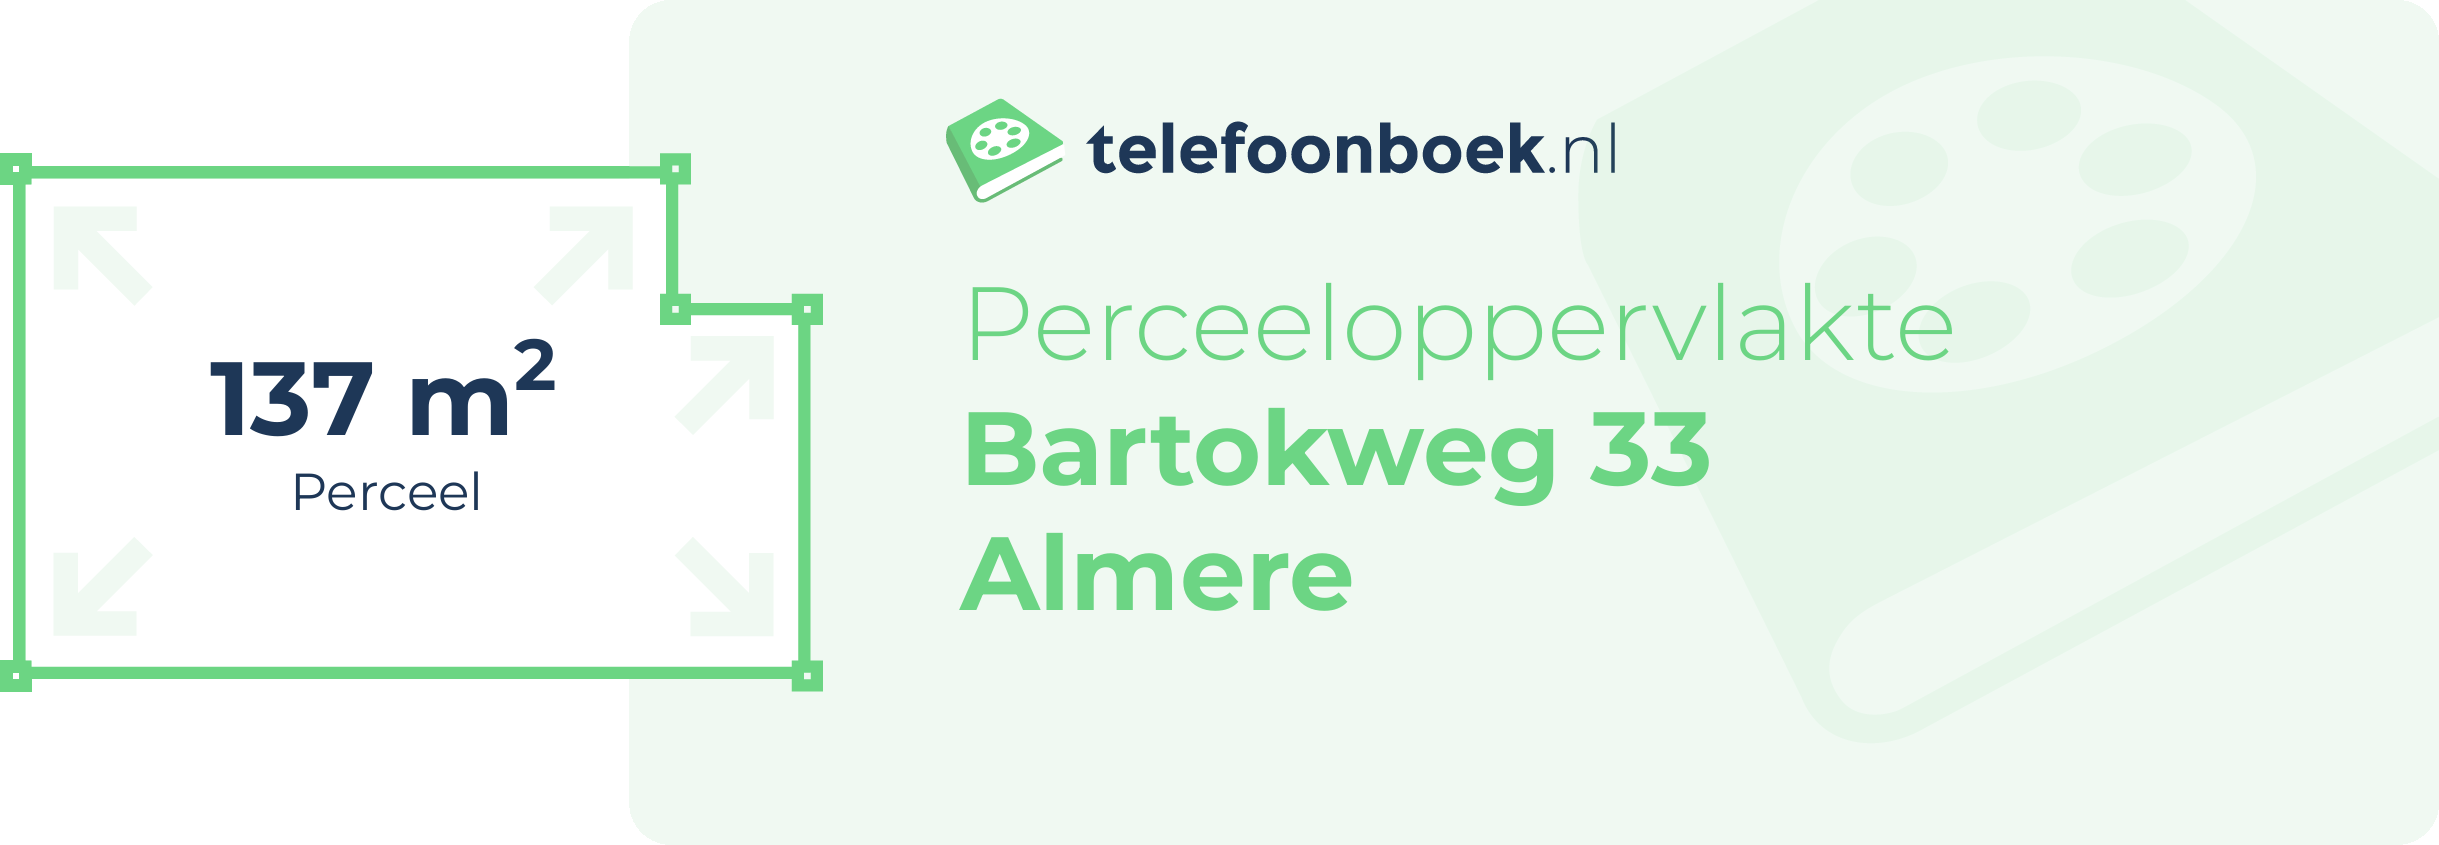 Perceeloppervlakte Bartokweg 33 Almere